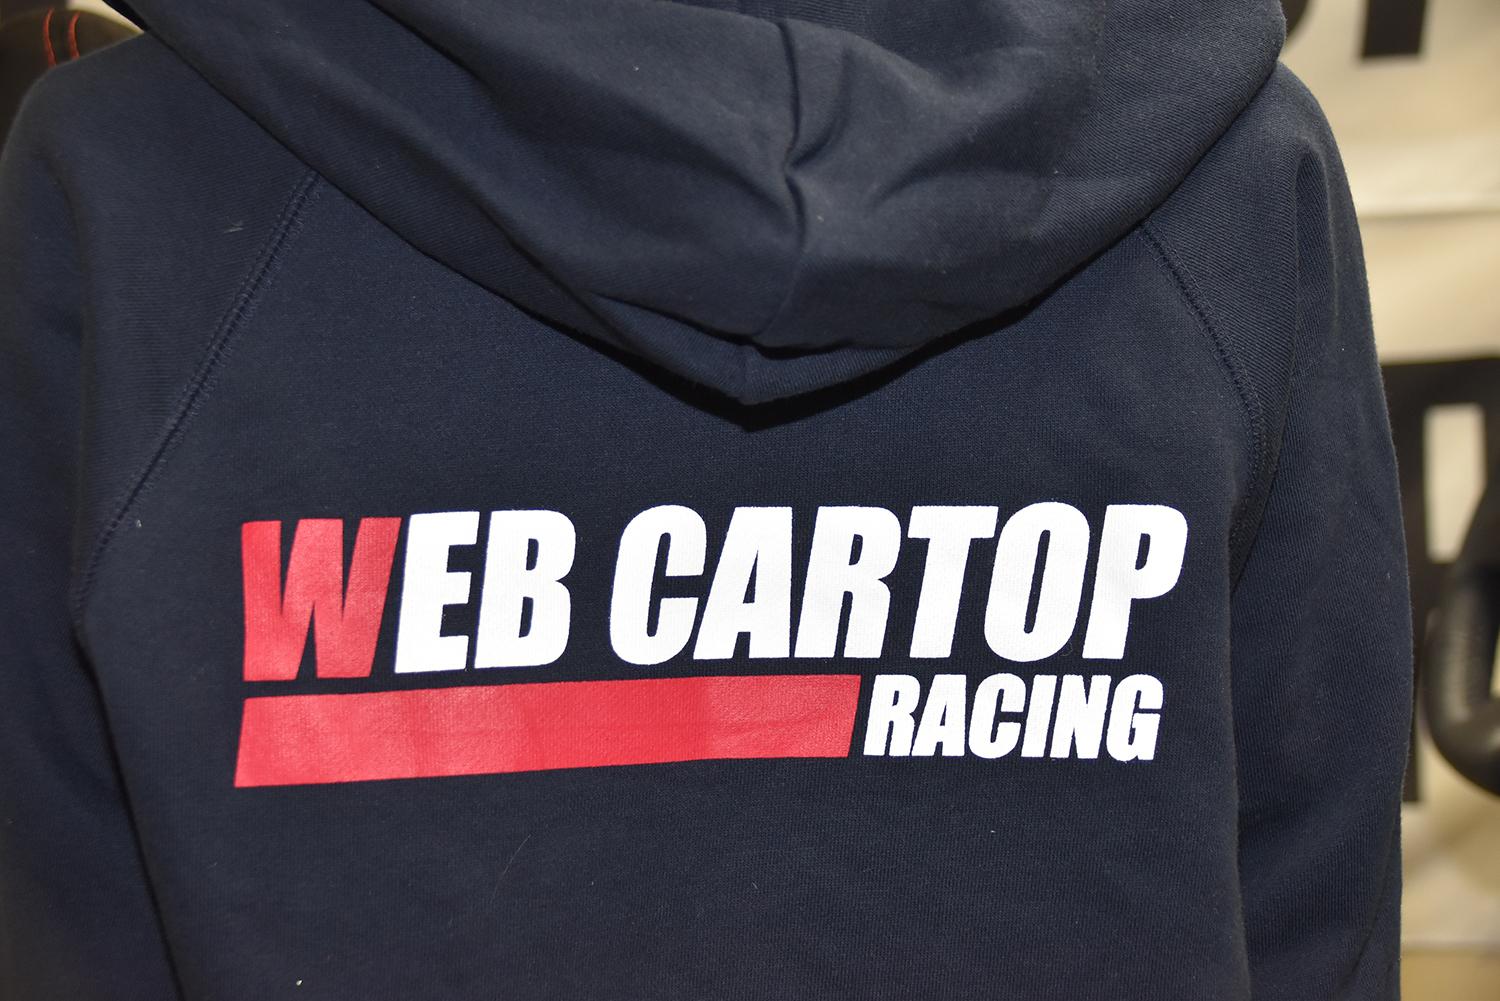 WEB CARTOP RACINGのパーカーのロゴ 〜 画像27